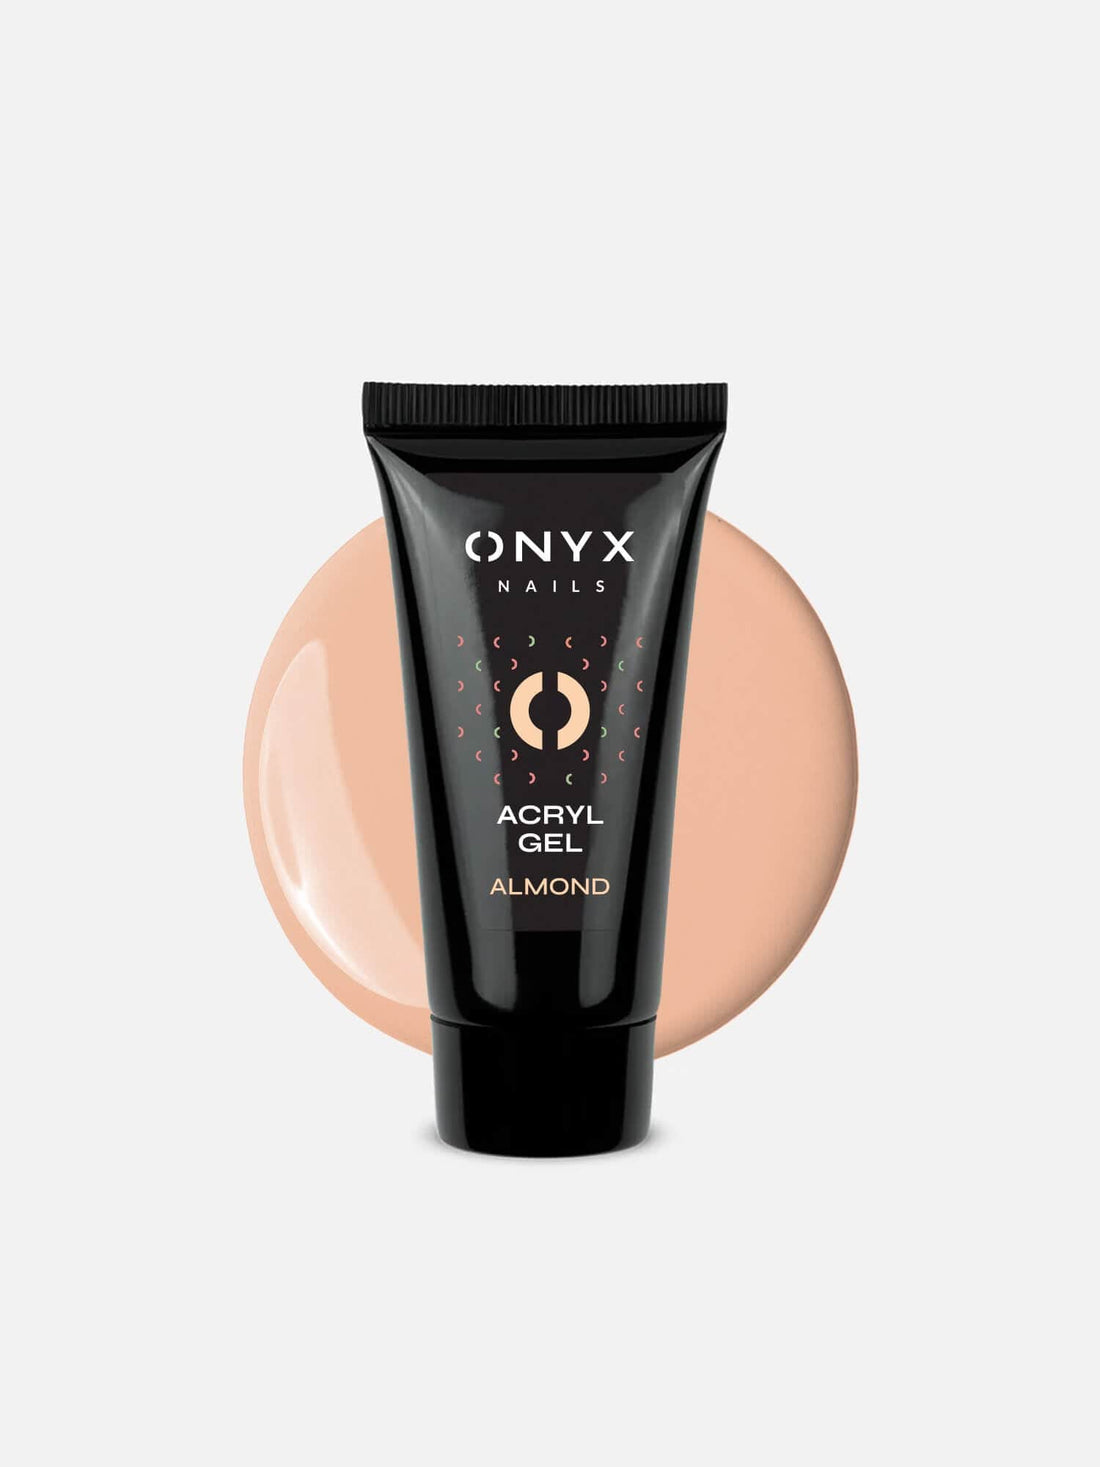 Onyx Nails AcrylGel Almond 30 g